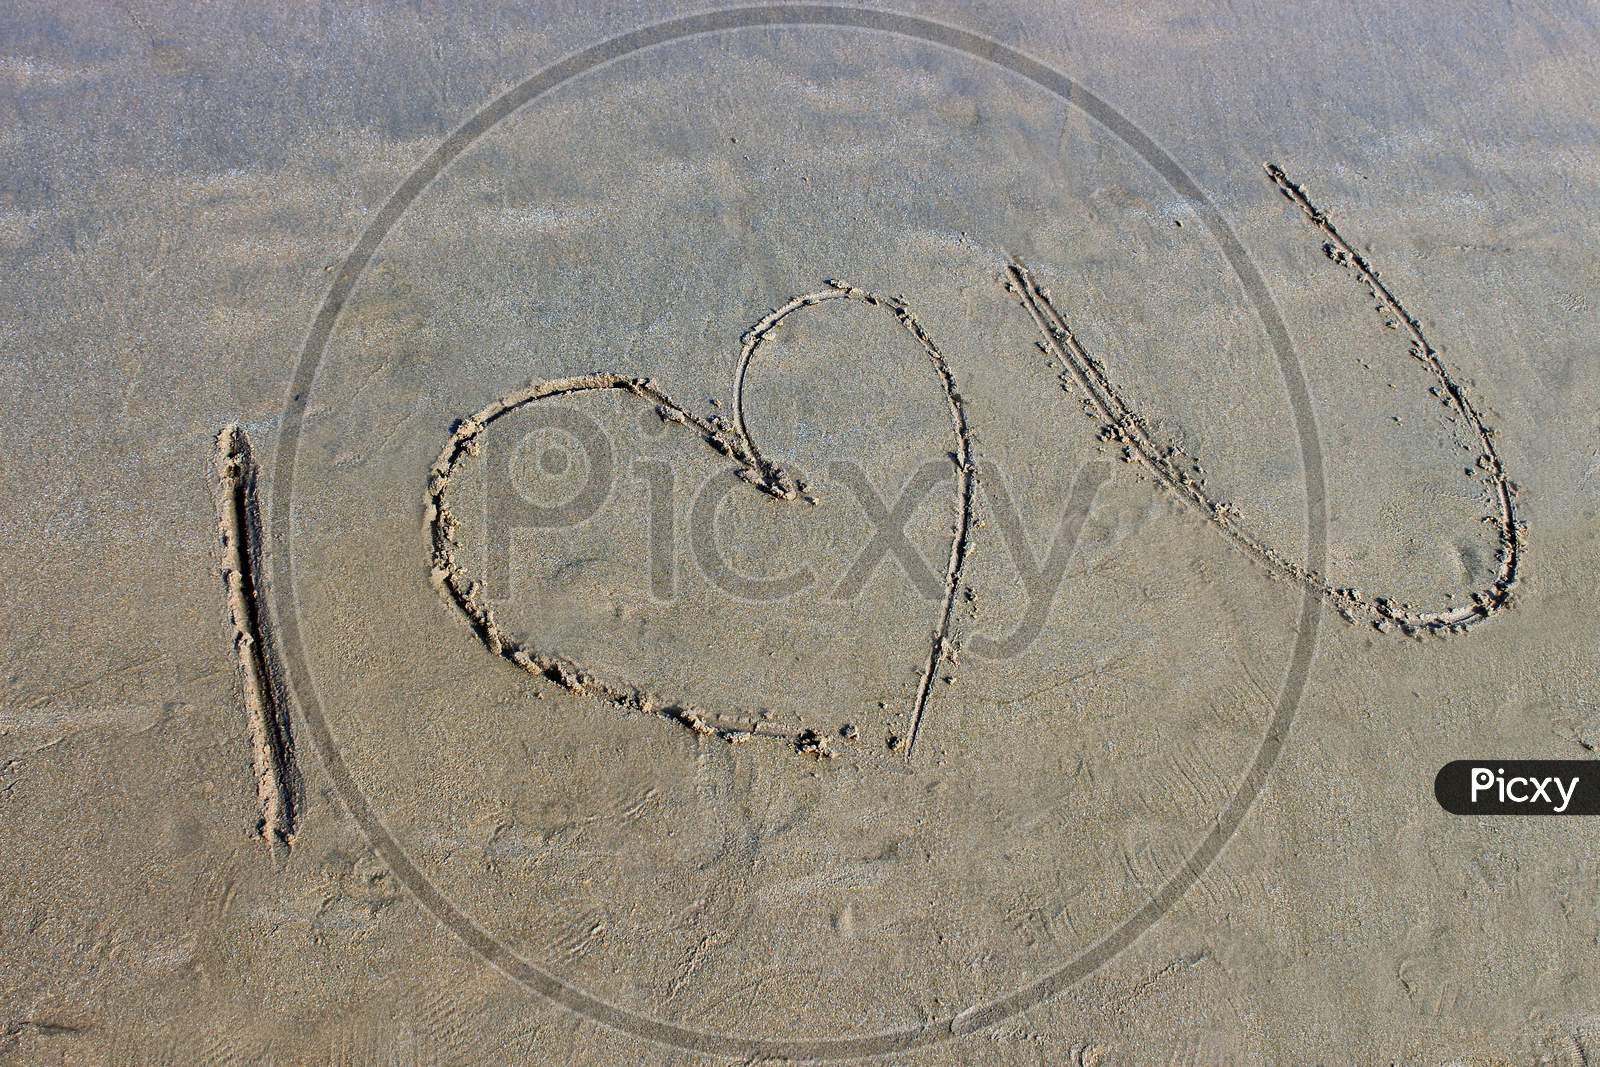 I Love You written on a Beach Shore